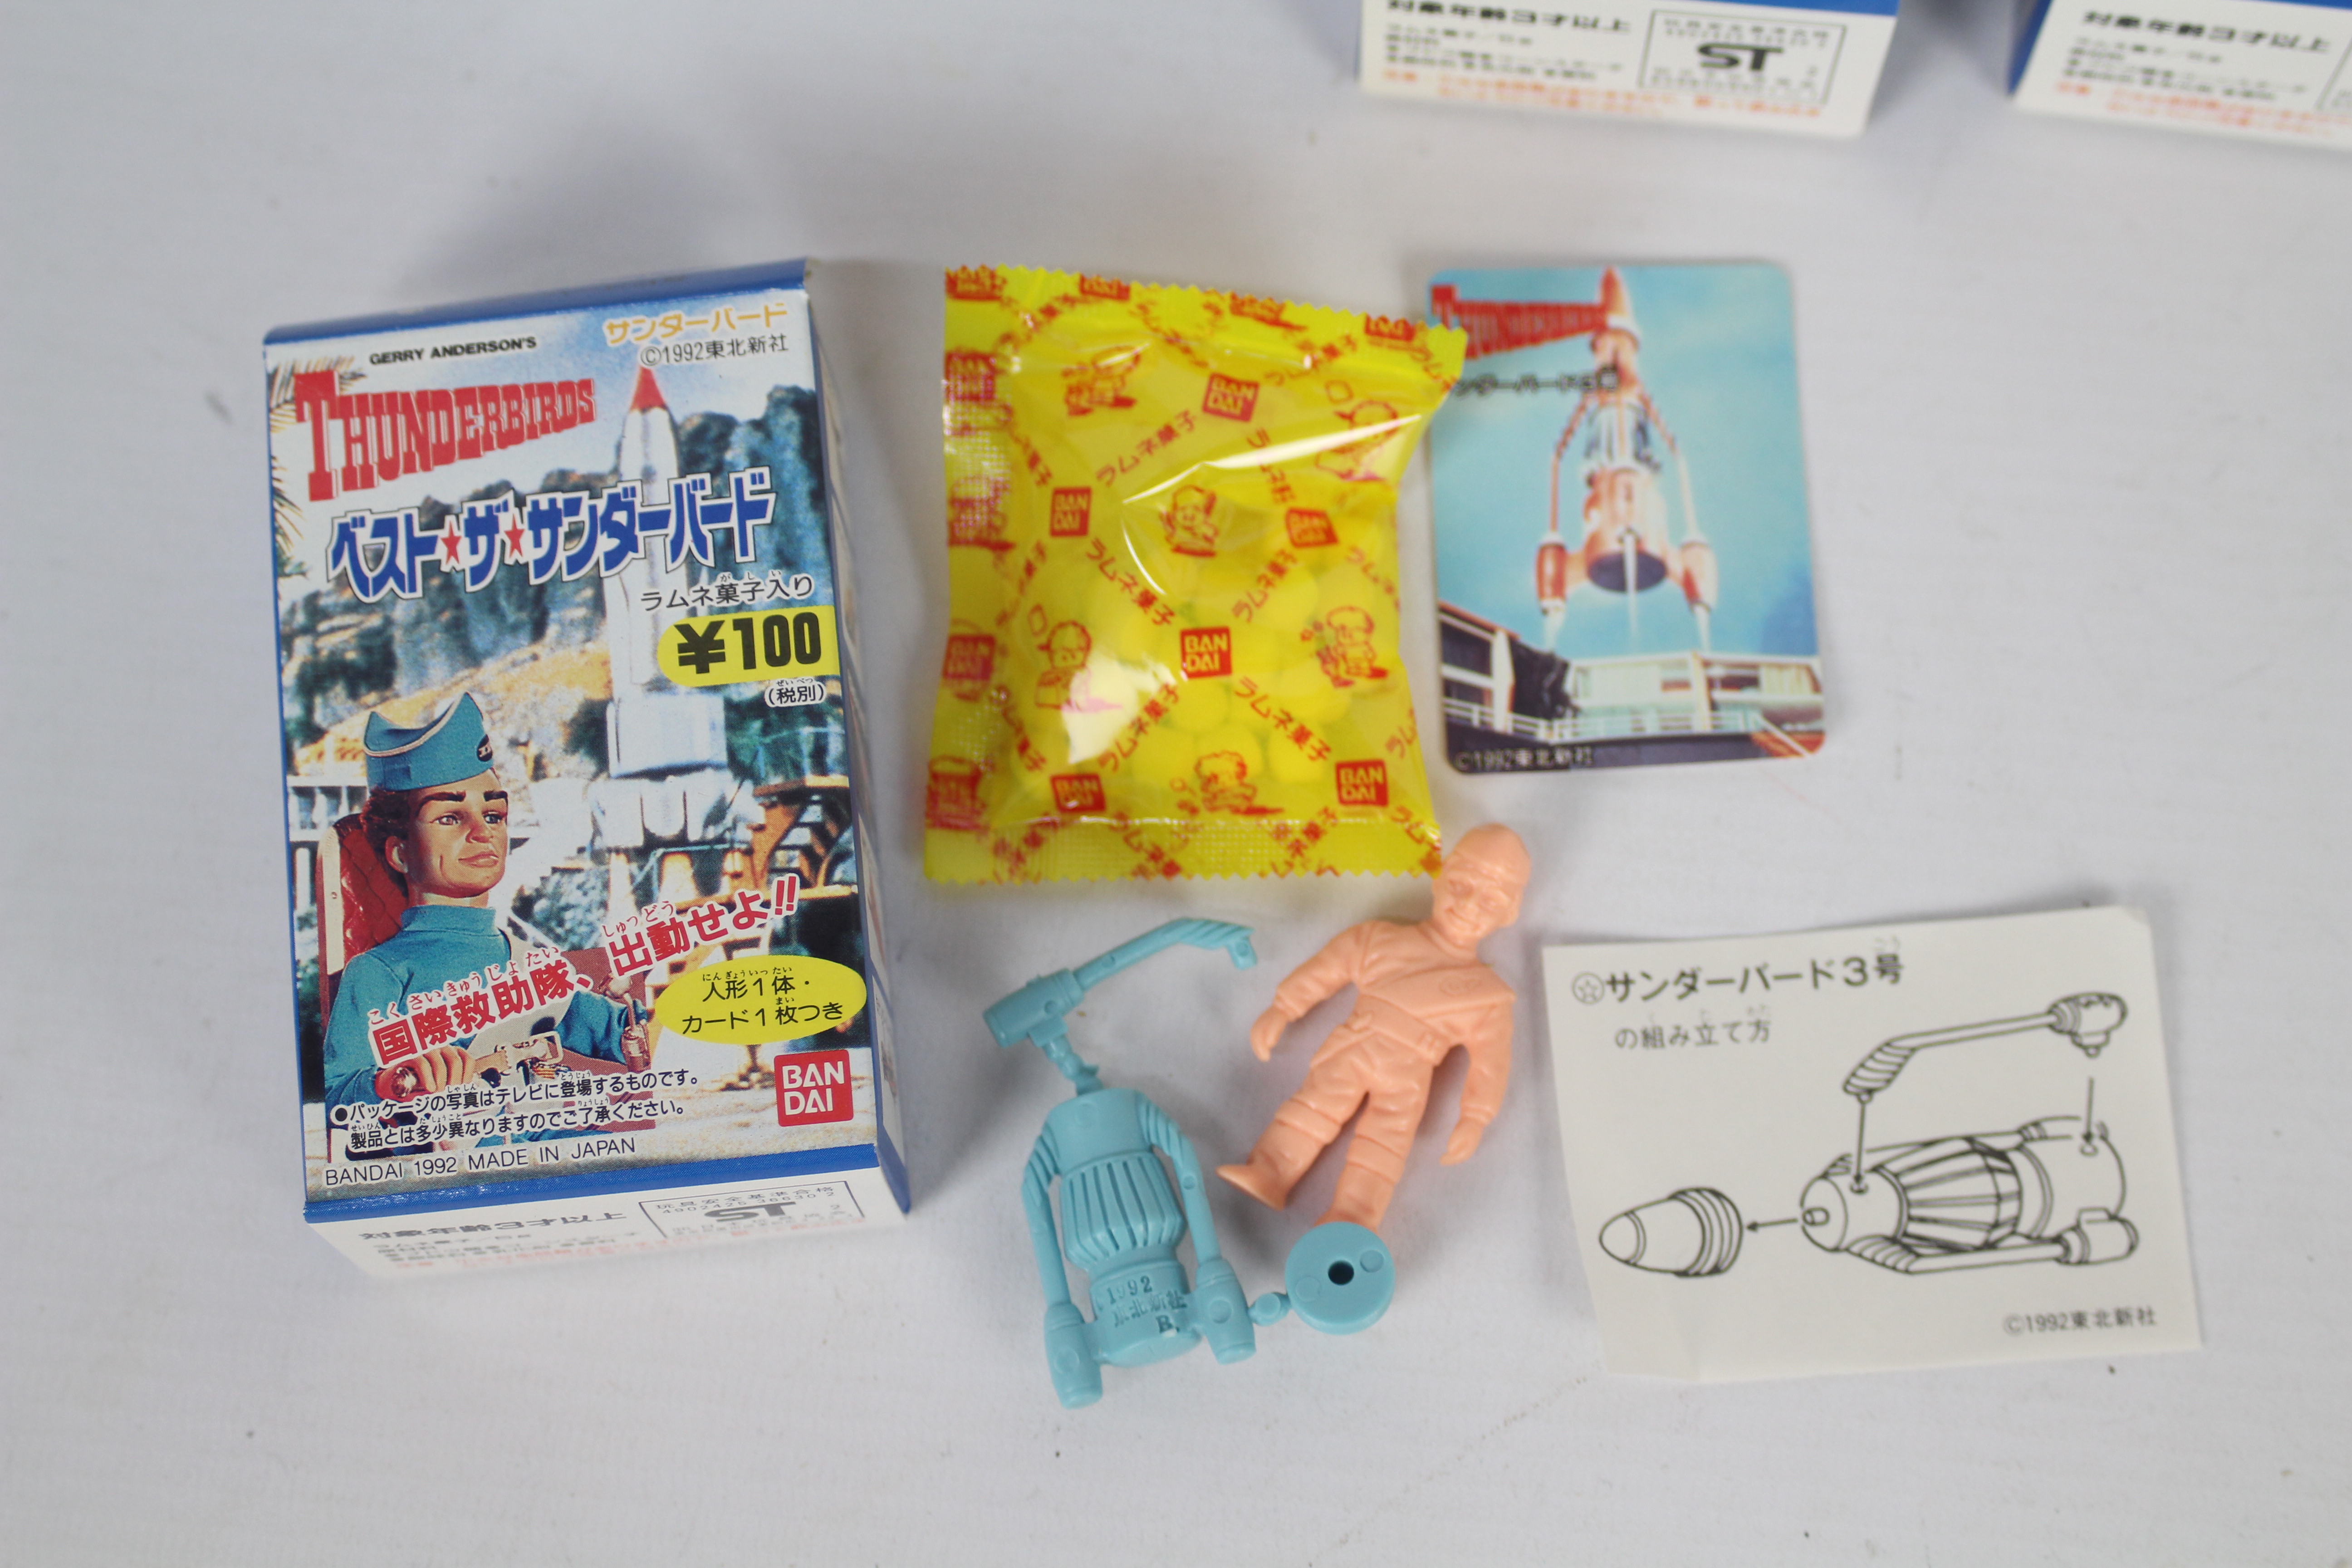 Bandai - A trade box of 10 vintage Bandai Japanese Thunderbirds Candy Boxes and Mini Toys. - Image 4 of 5